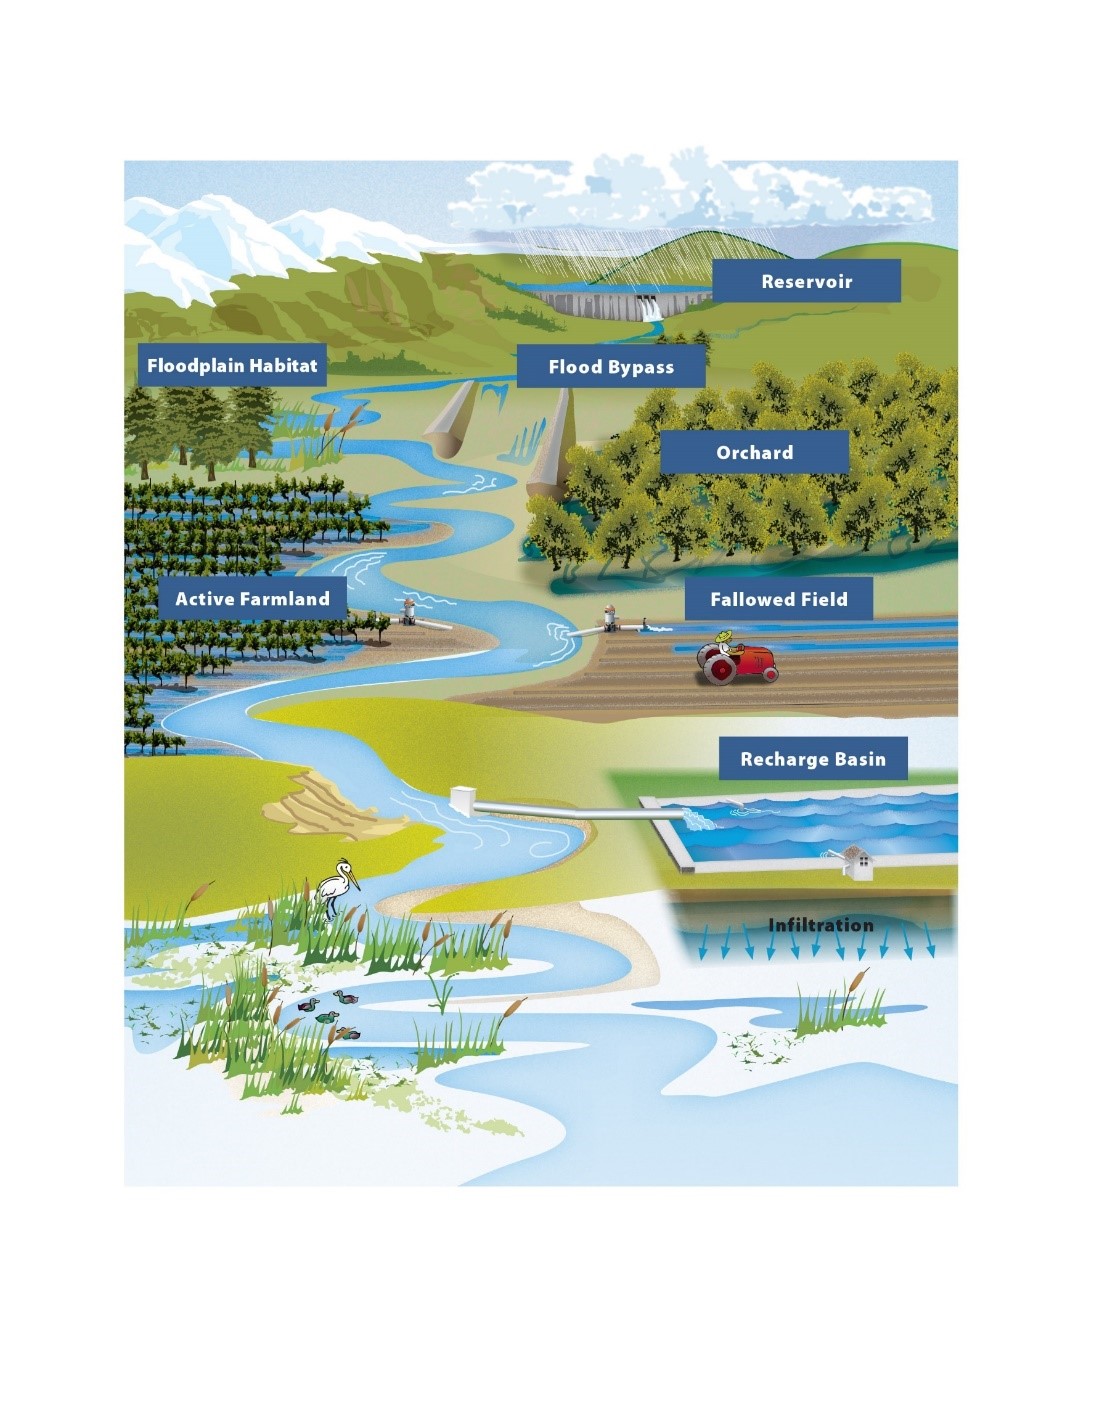 Flood - MAR illustrated concept of aquifer recharge.